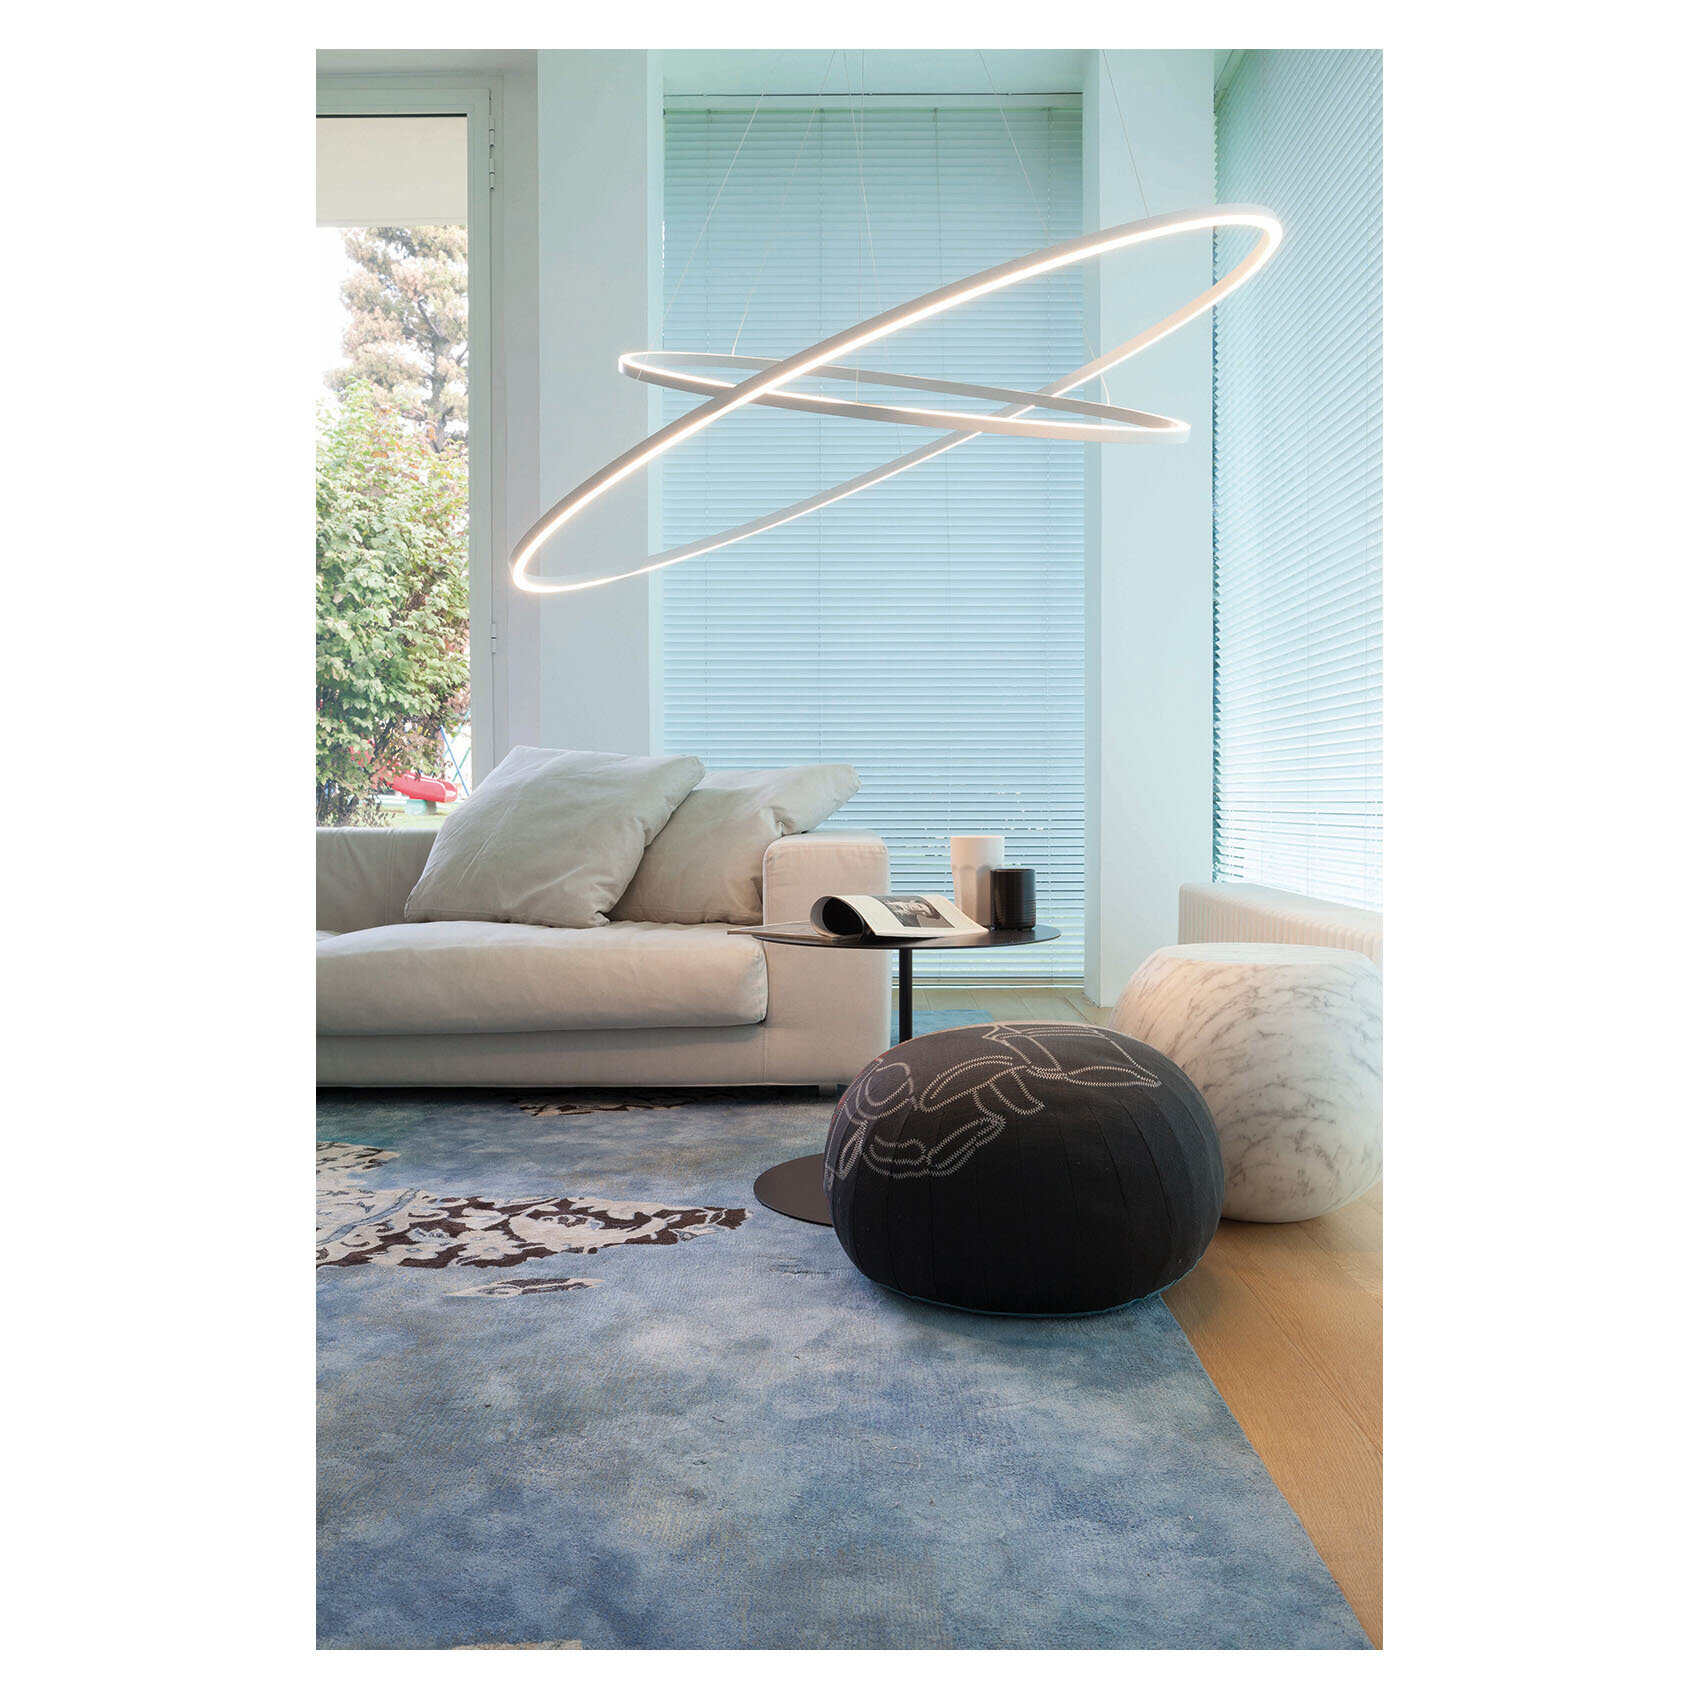 NEMO Ellisse 圓圈型雙圈LED吊燈用於客廳